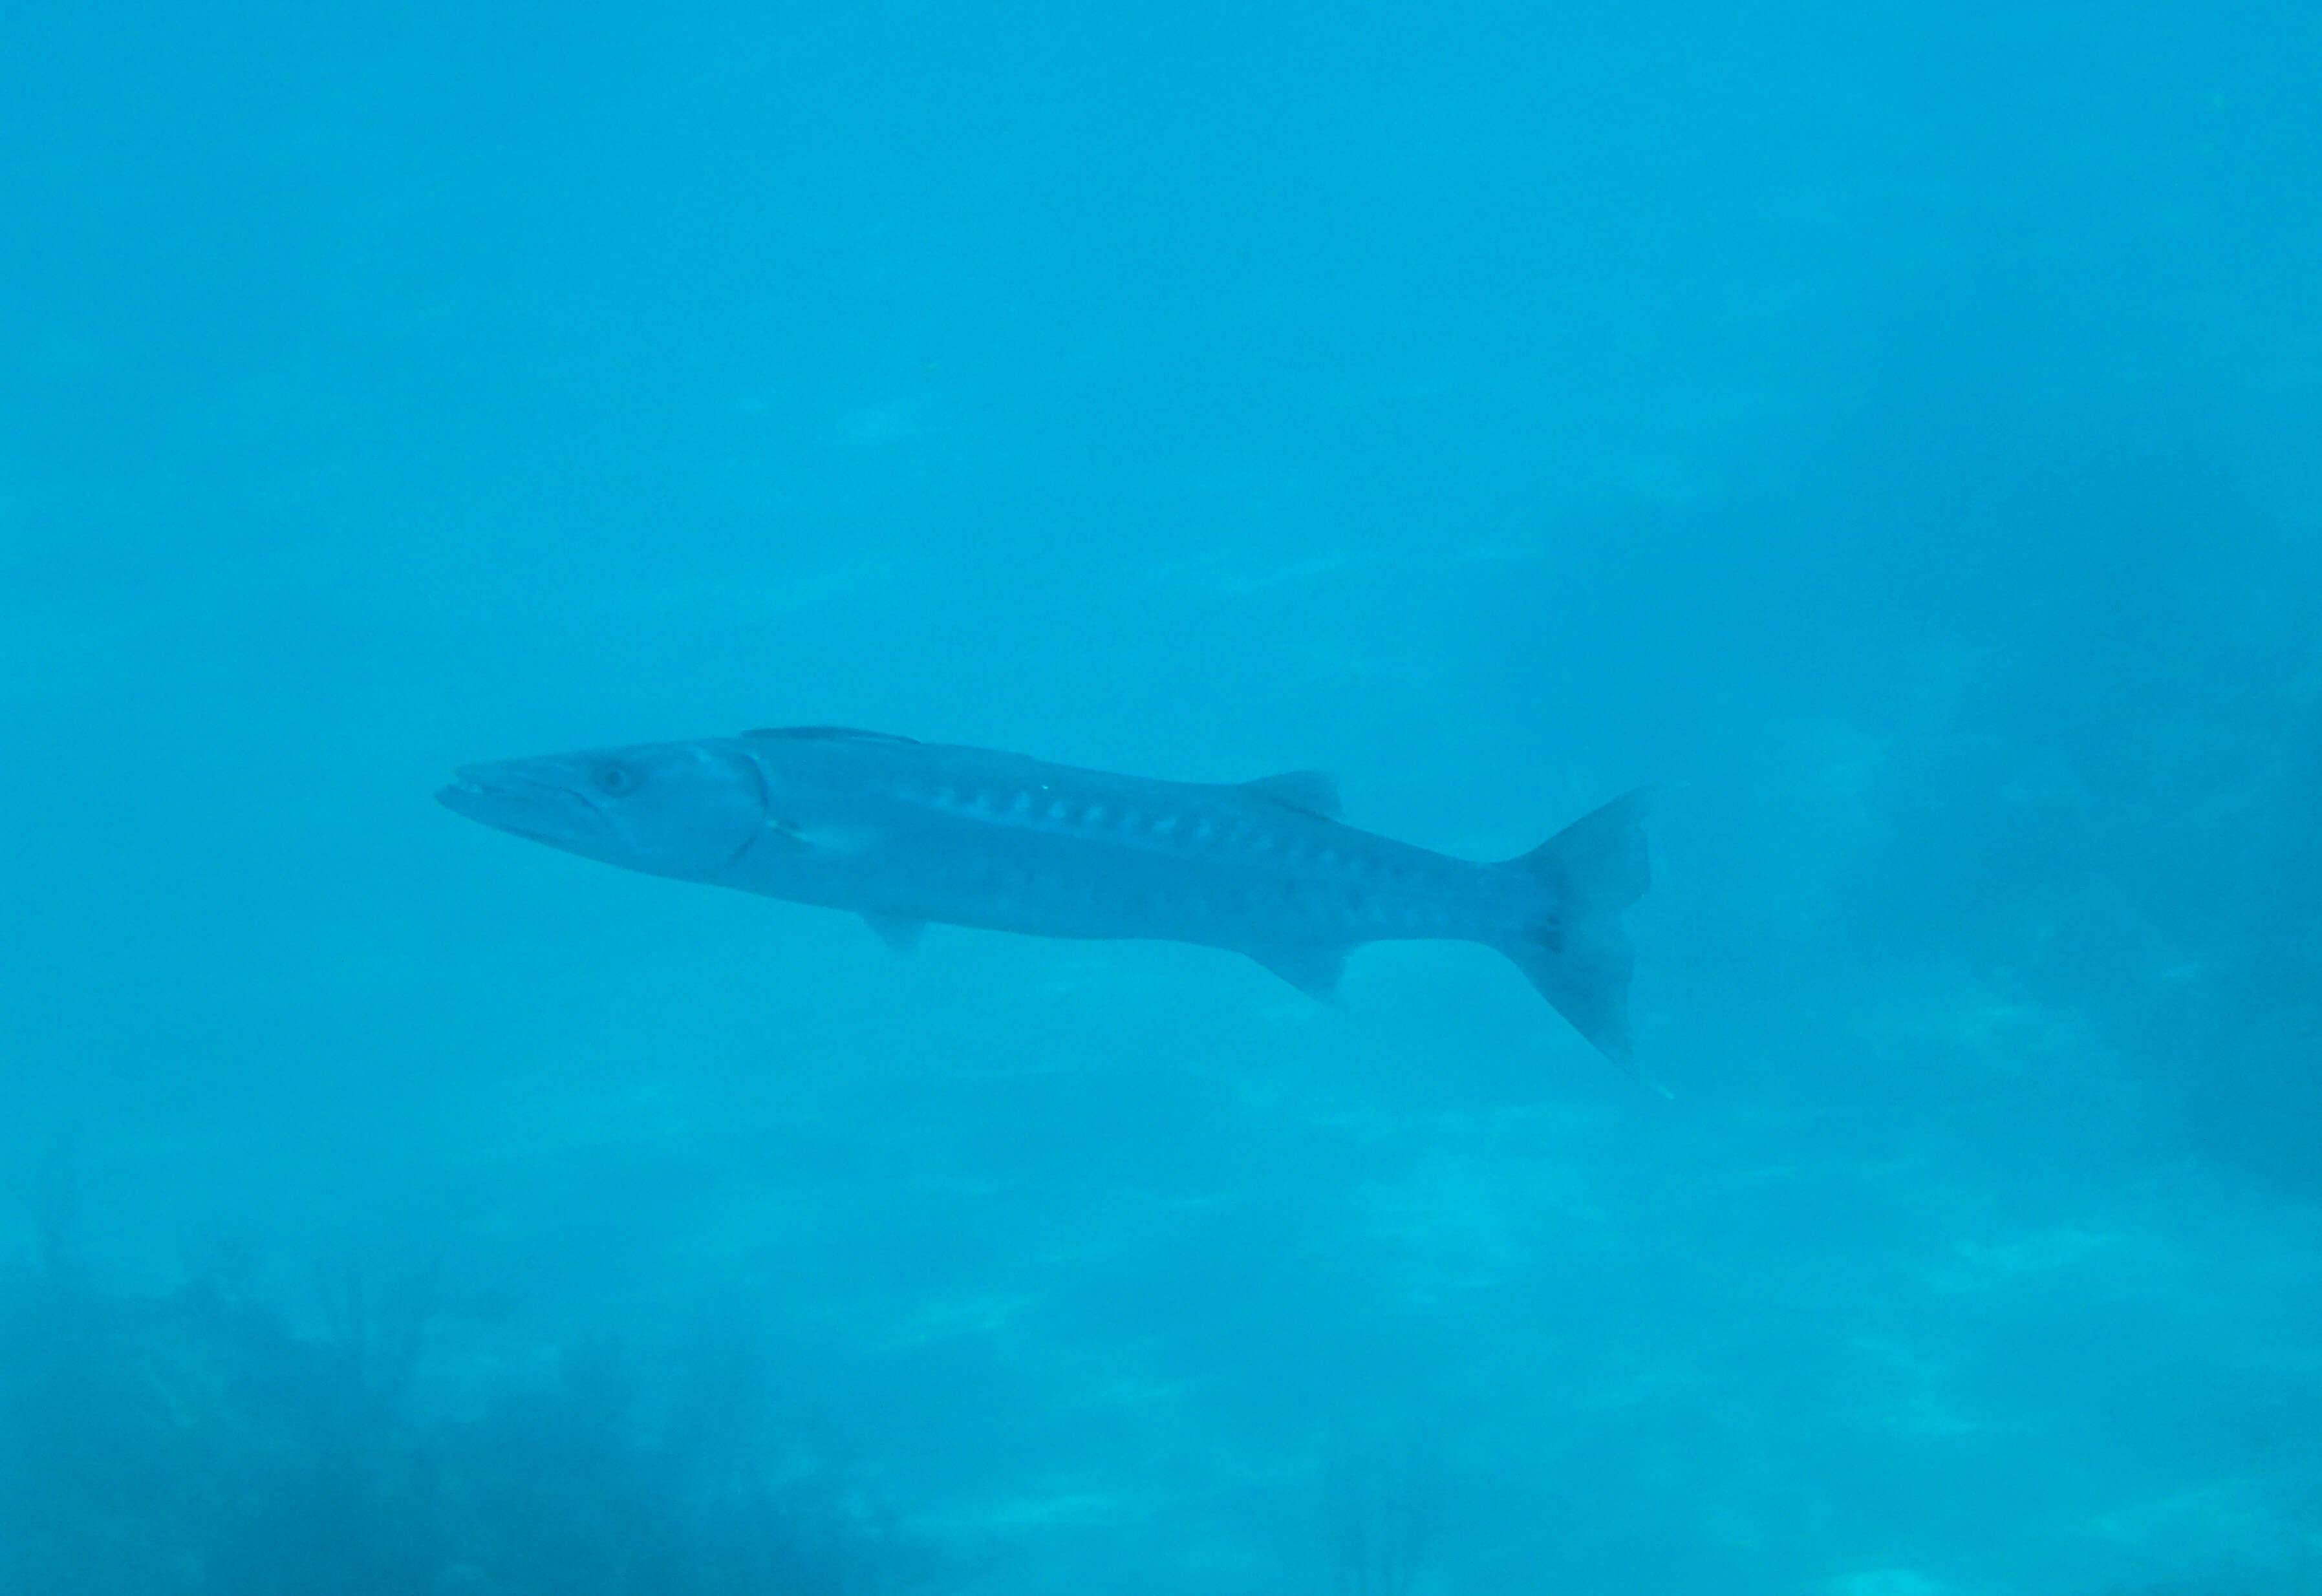 Image of barracudas